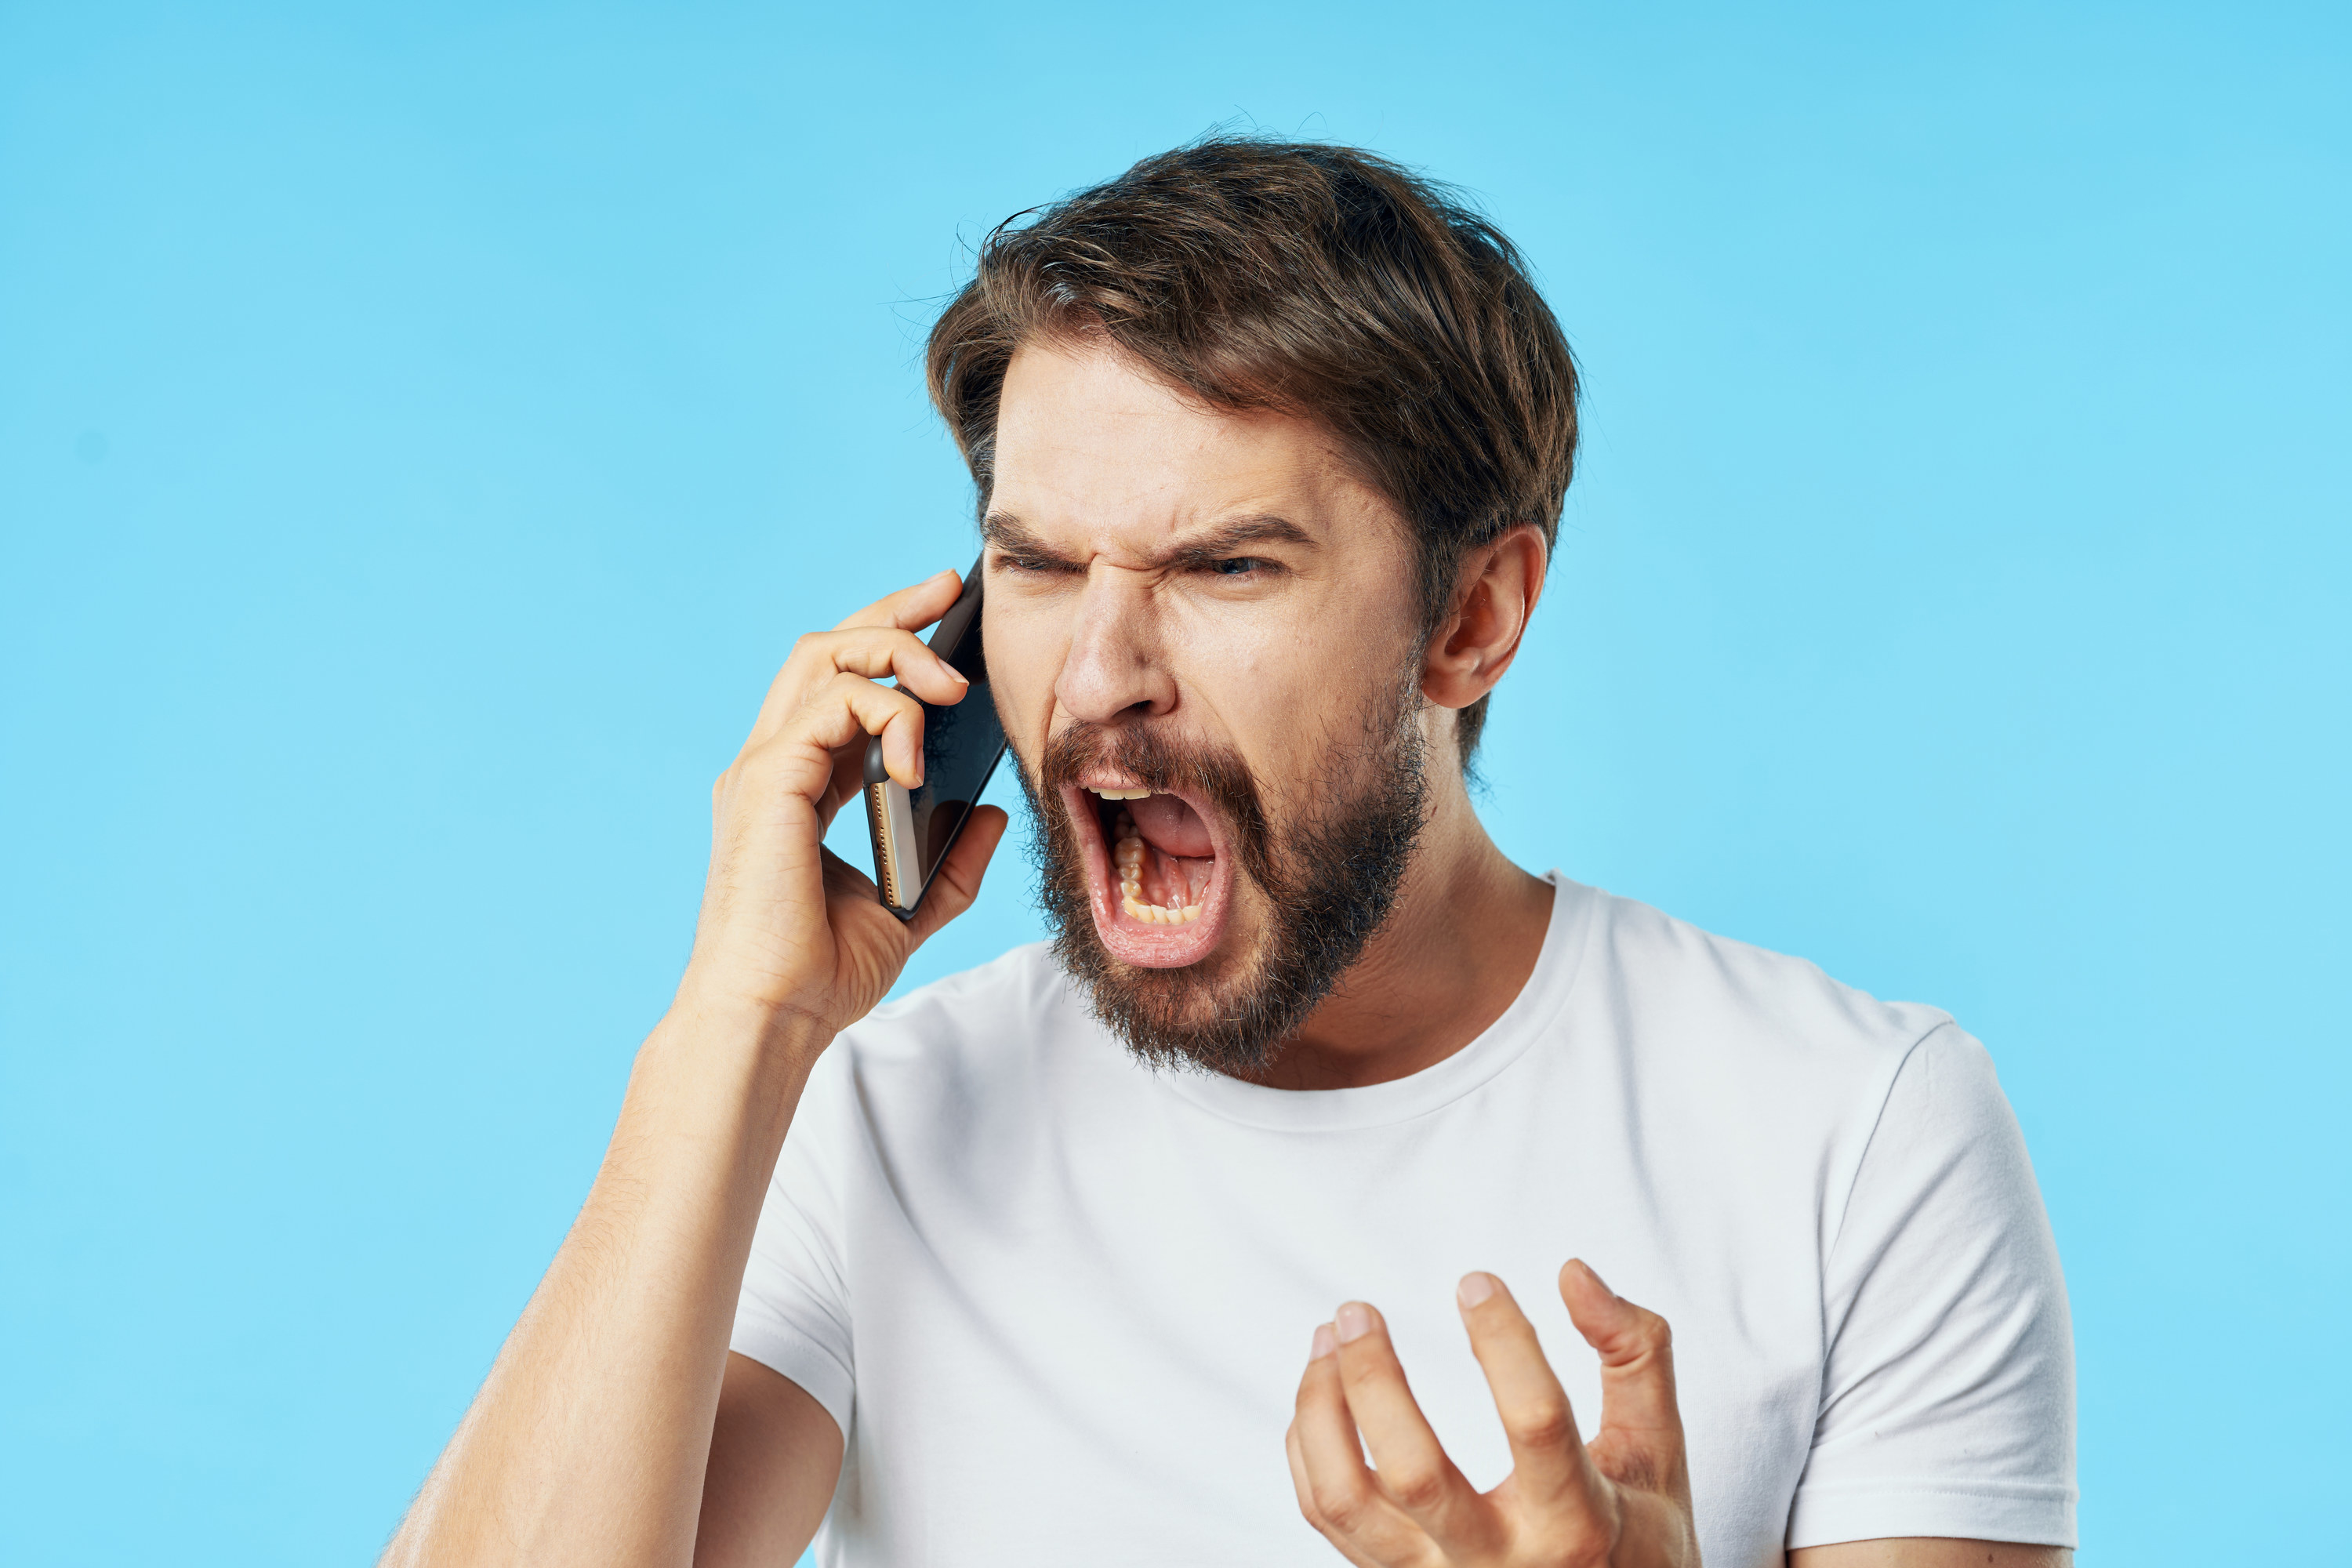 A man yells during a phone call